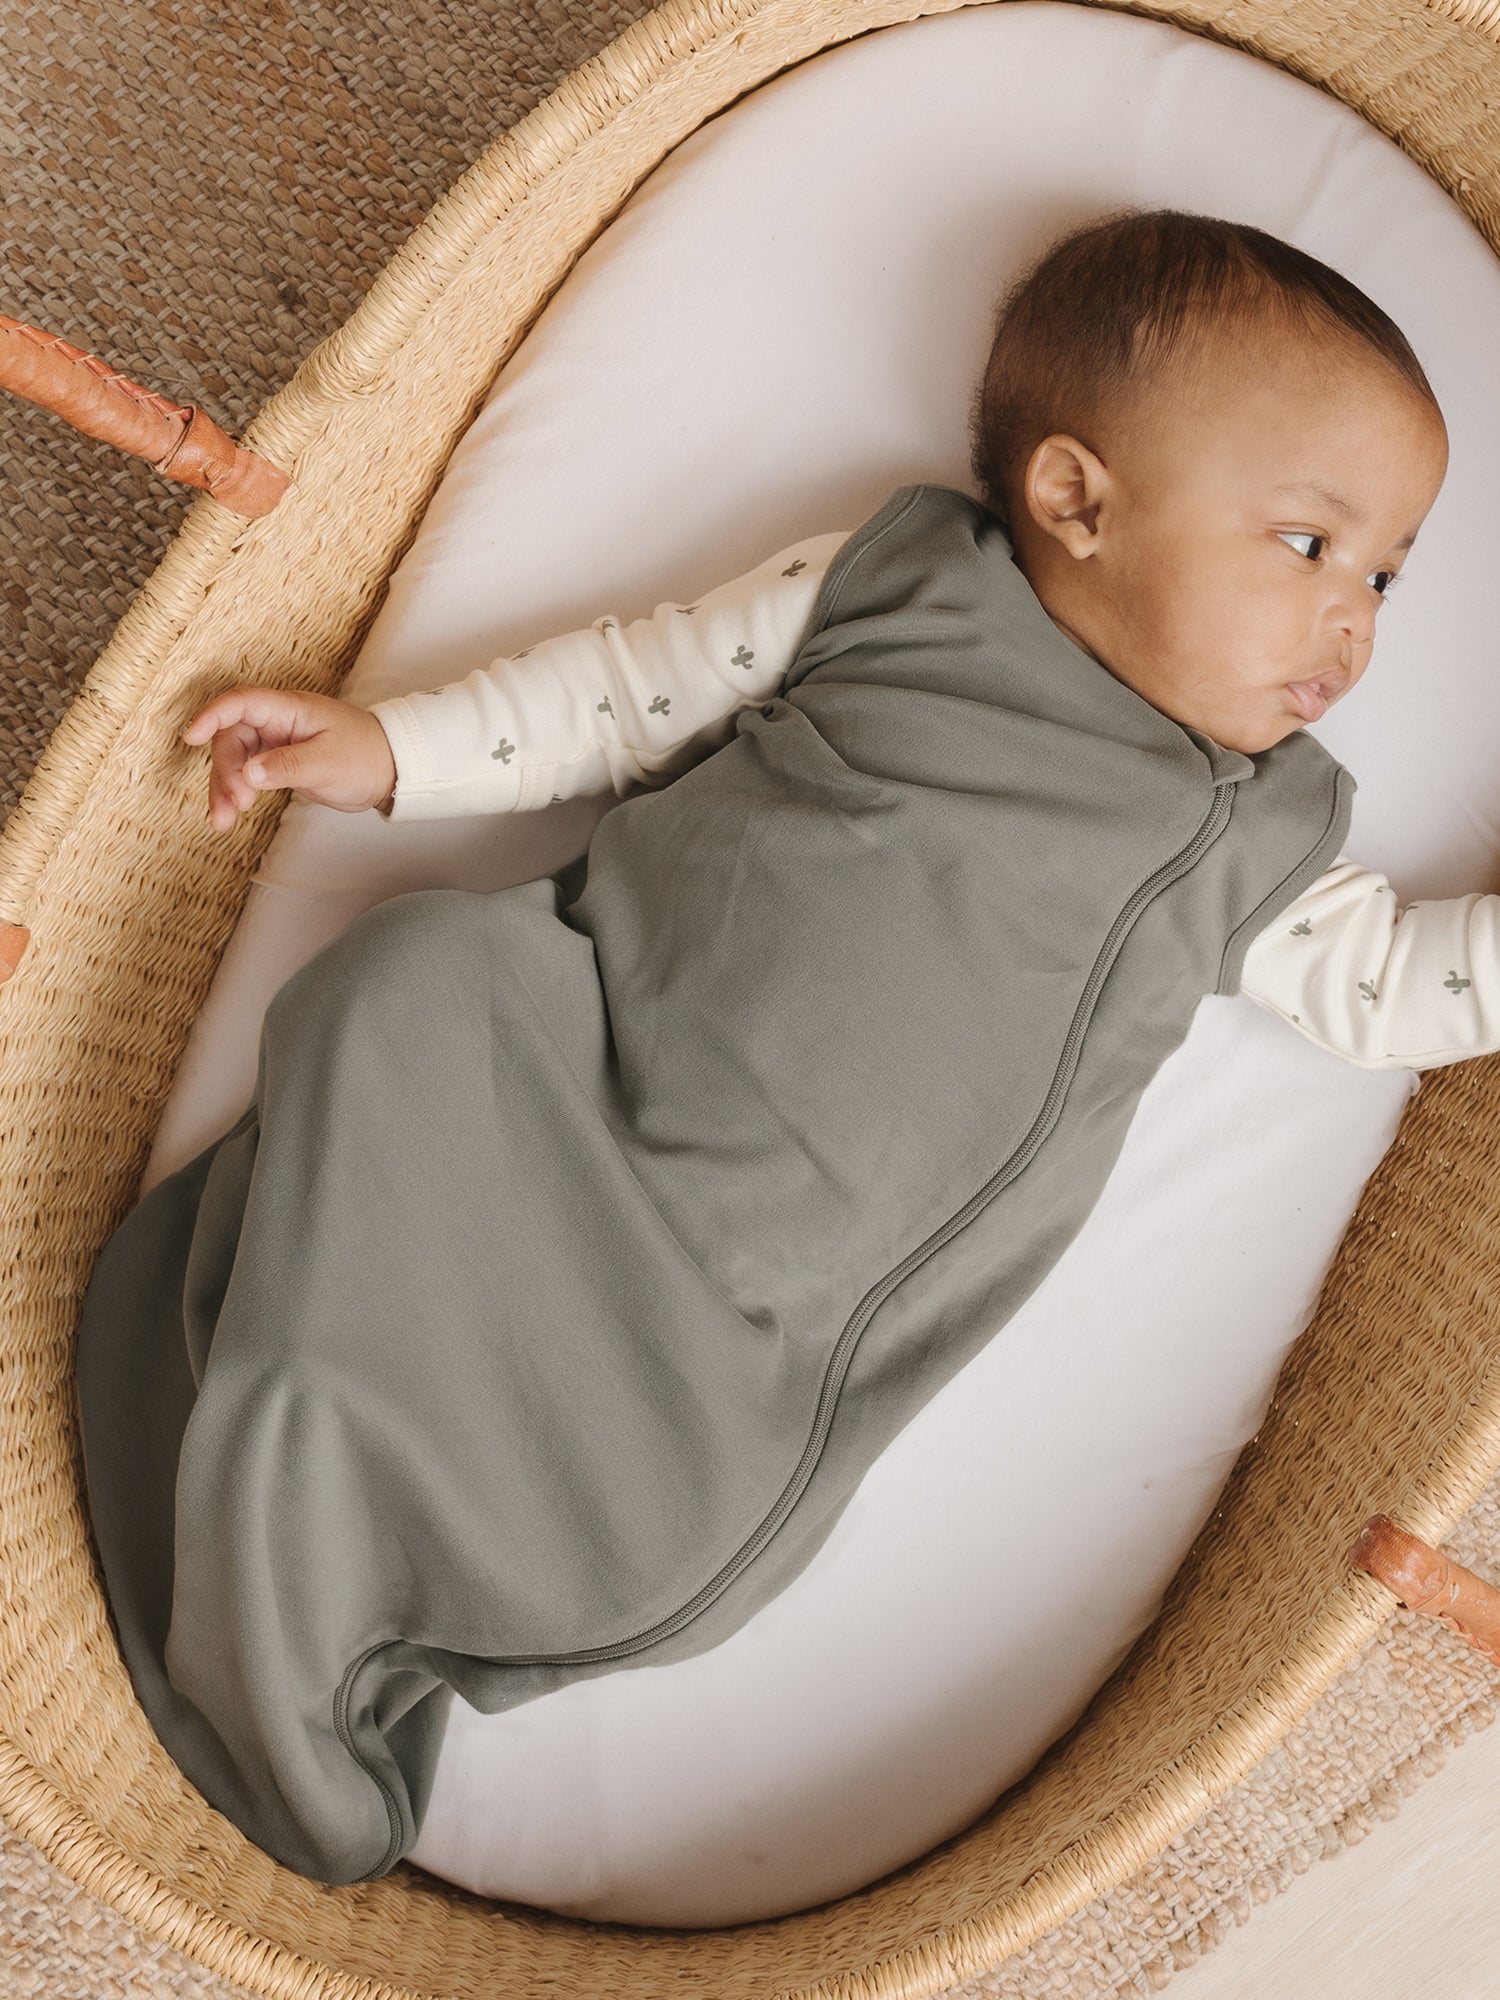 a baby in a sleep sac